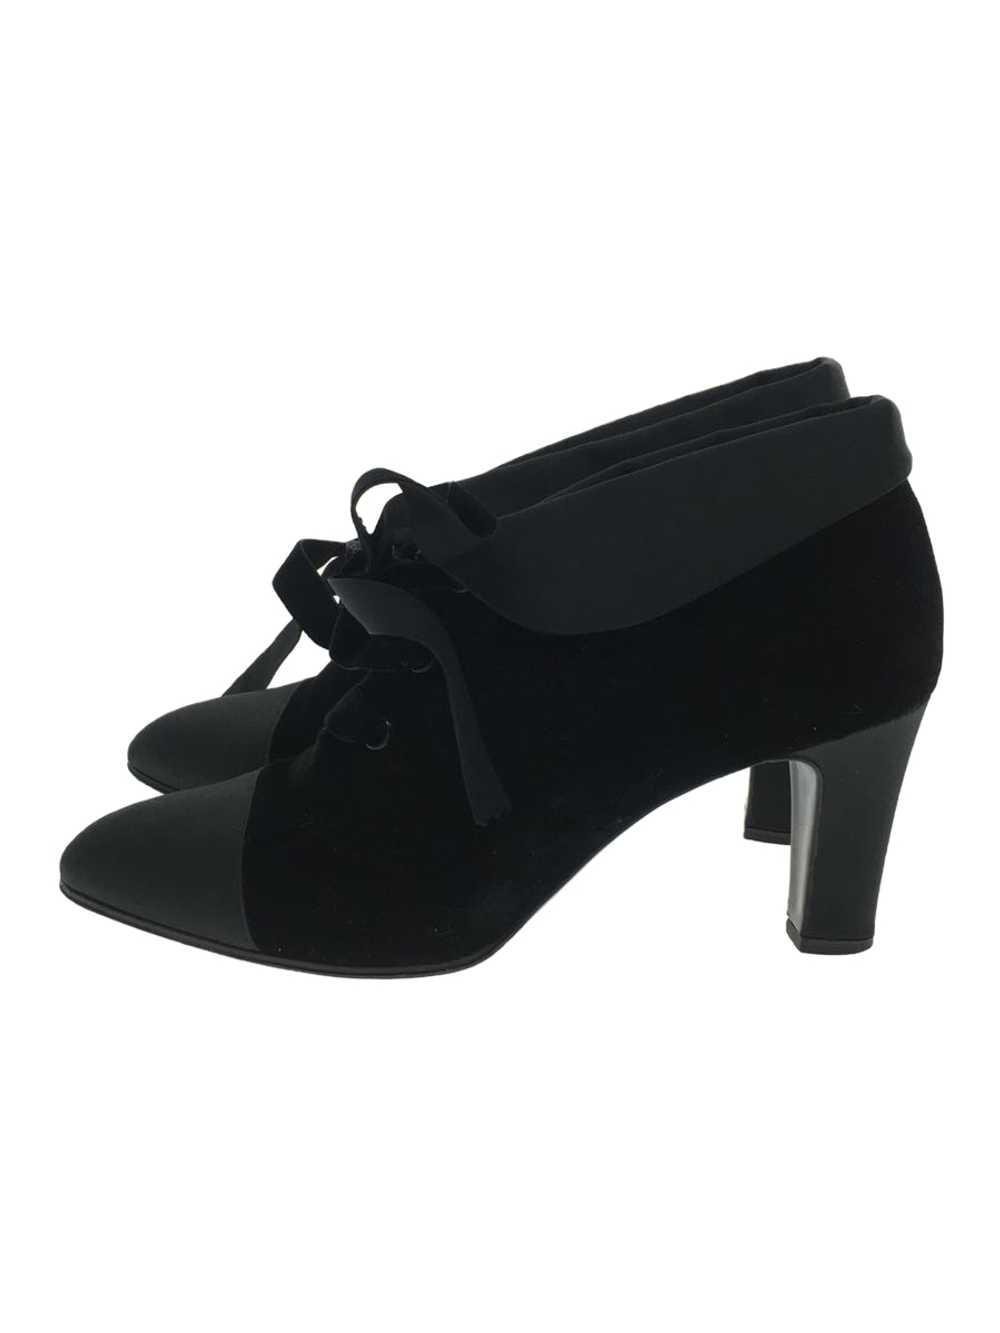 Chanel Pumps/36/Black/Suede Shoes Bbv86 - image 1